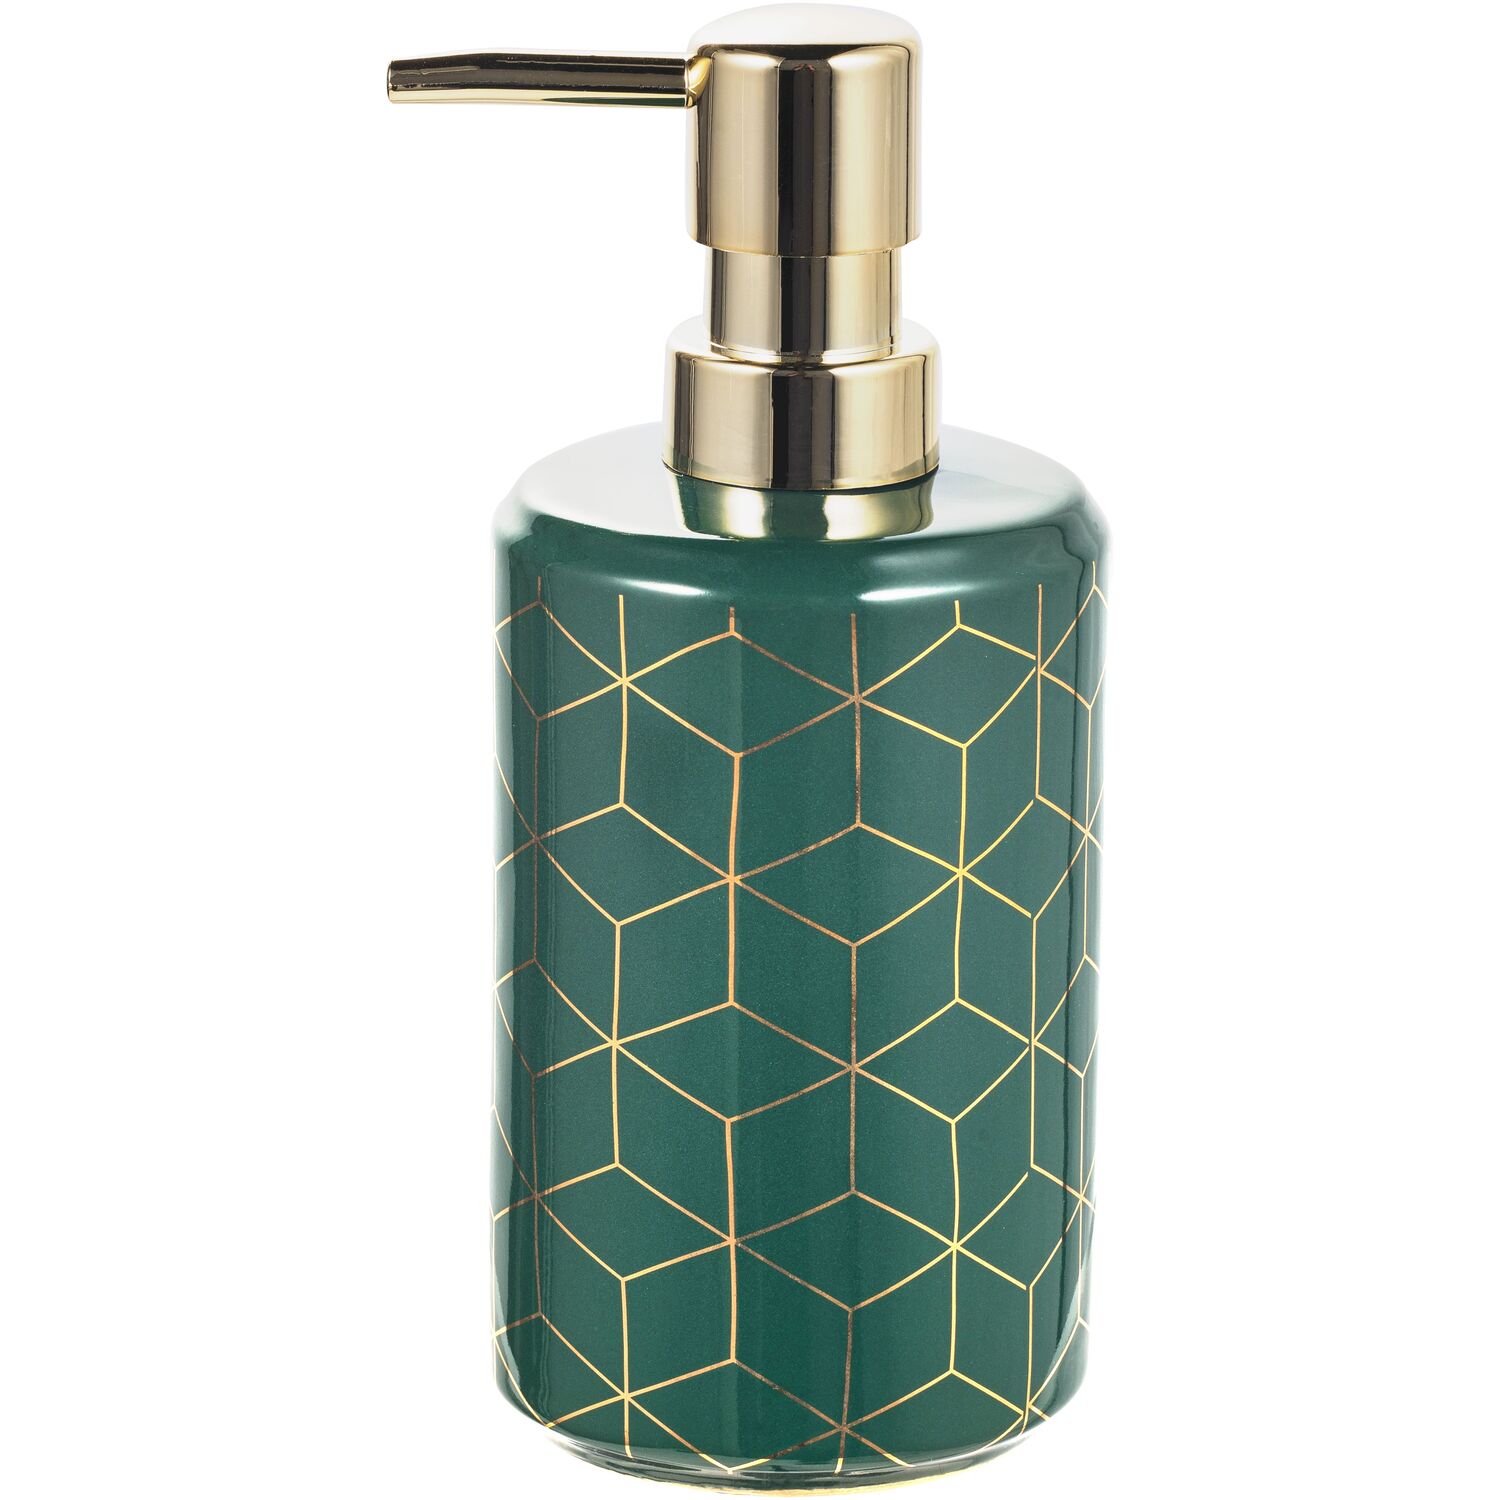 Ashley Soap Dispenser - Emerald Image 1